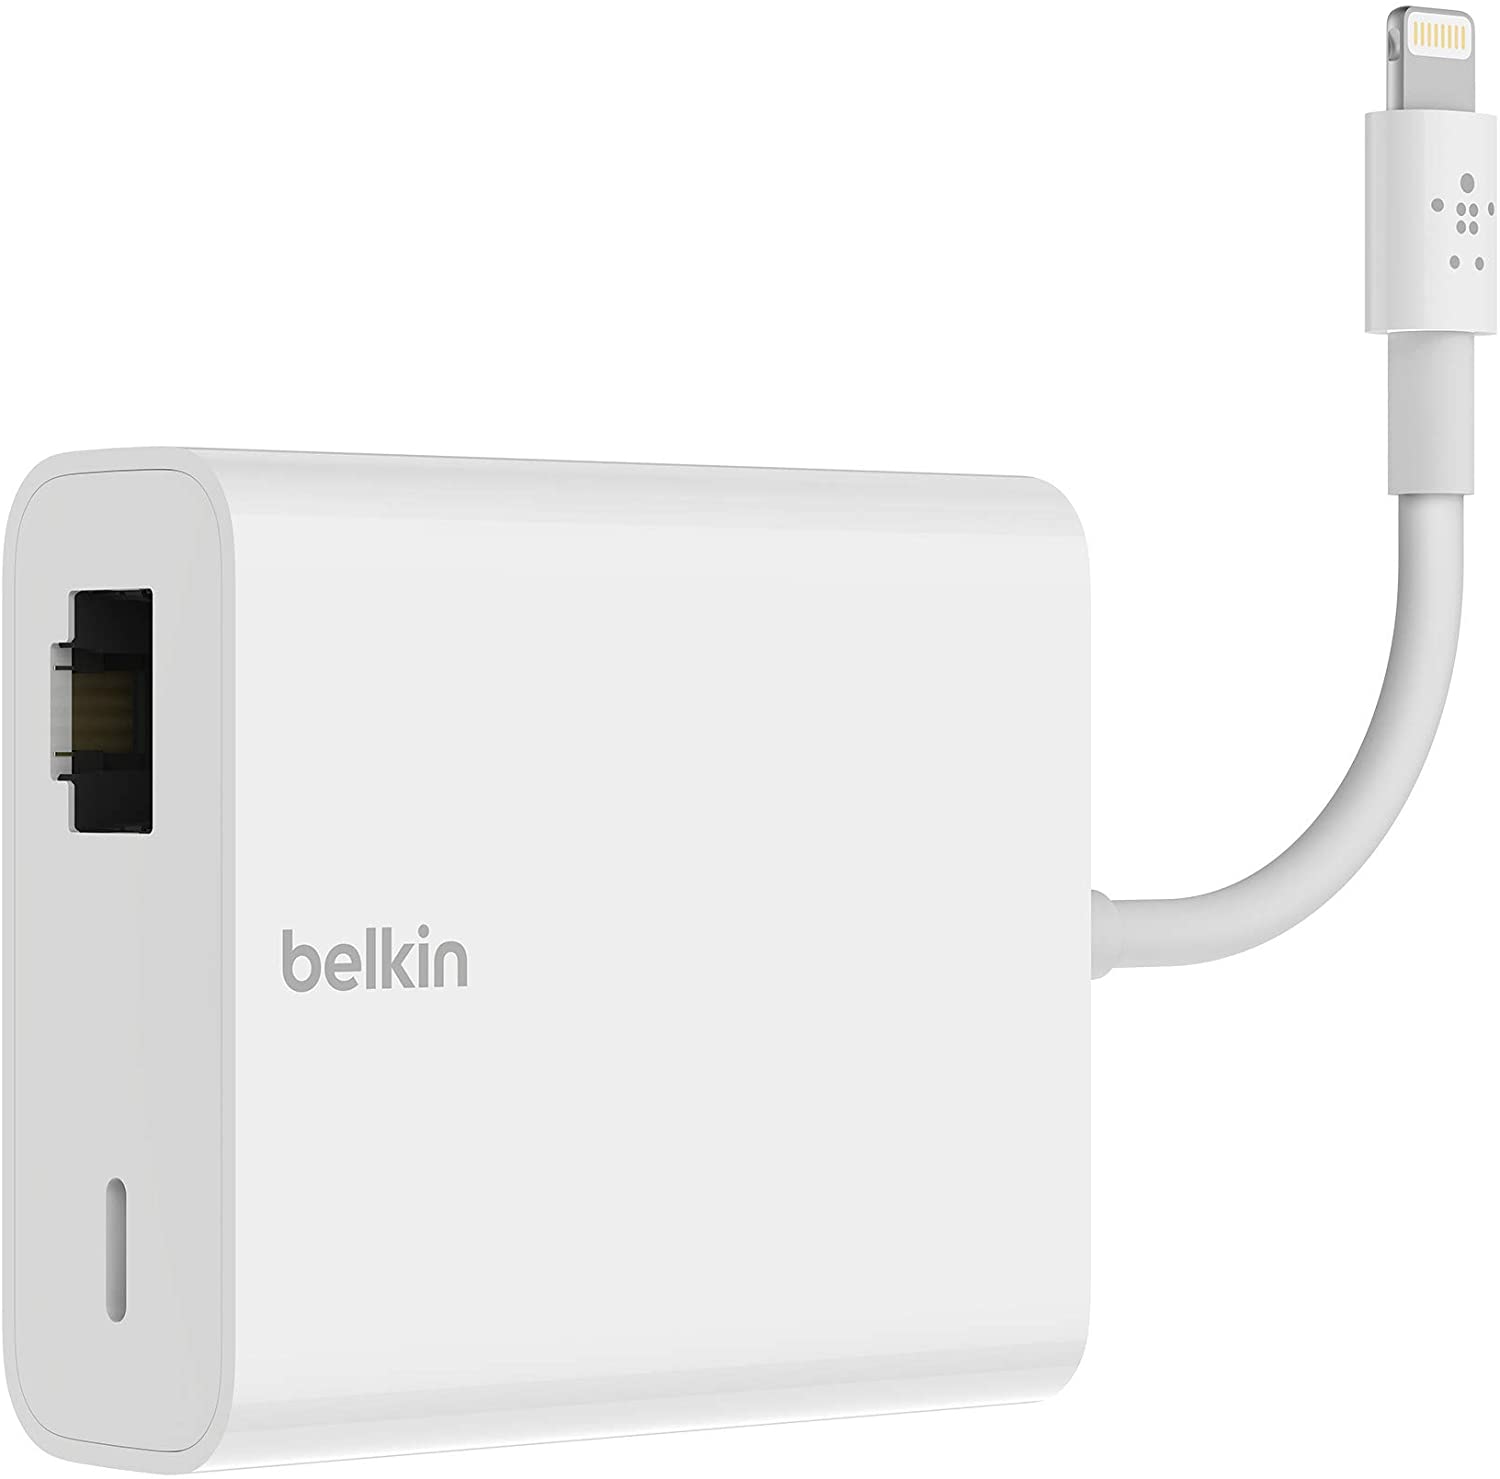 Belkin Ethernet + Power Adapter with Lightning Connector - (B2B165bt)